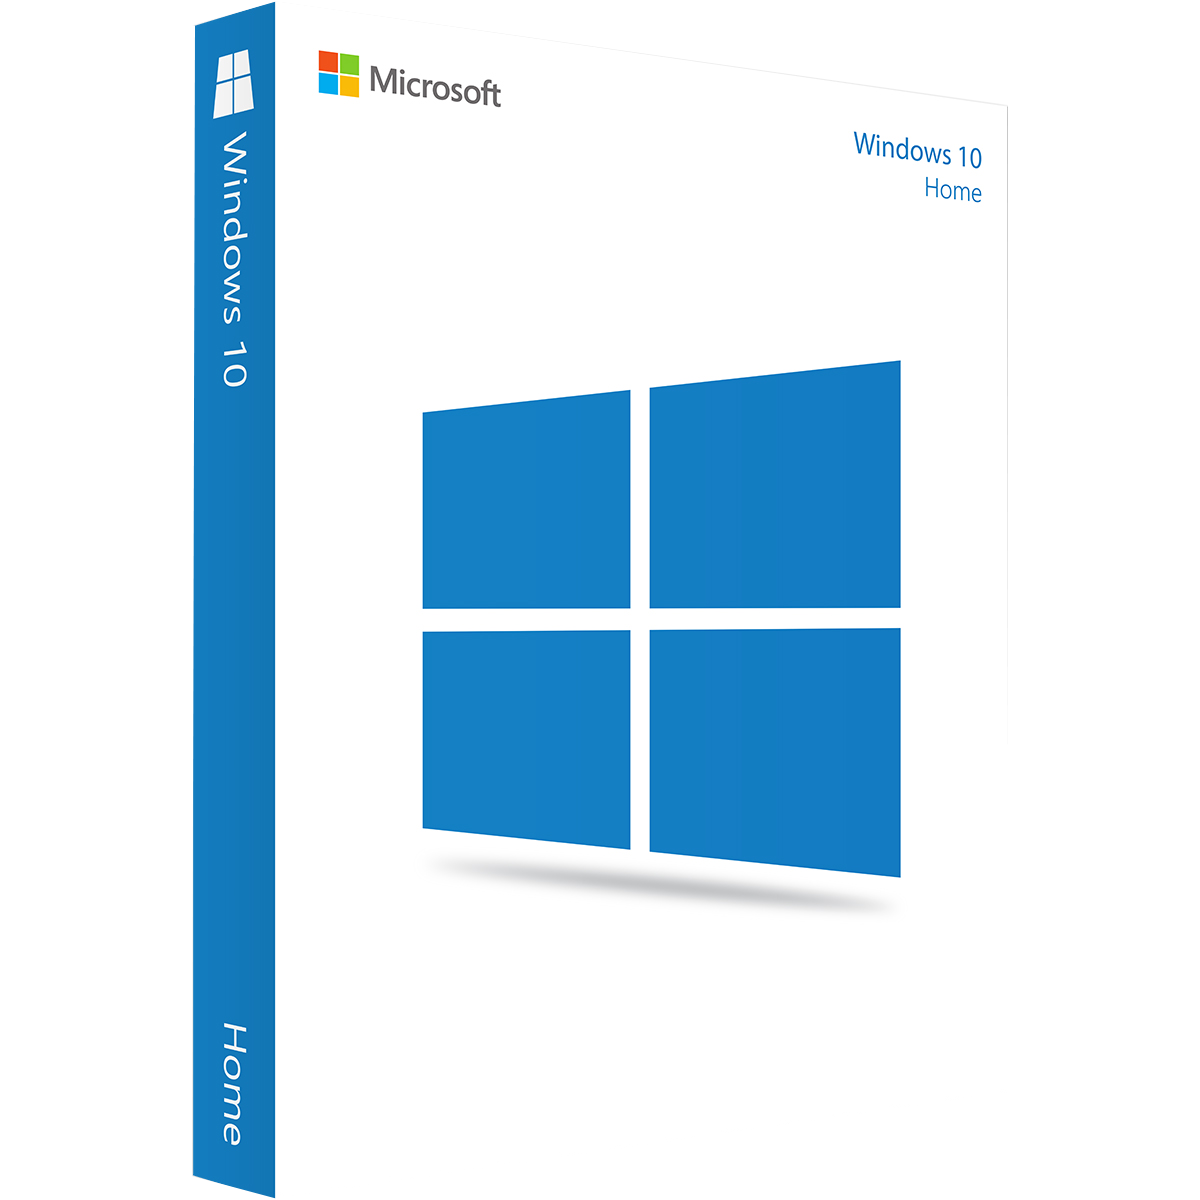 Windows 10 Home OS ダウンロード版 プロダクトキーを購入 - FLOX.JP